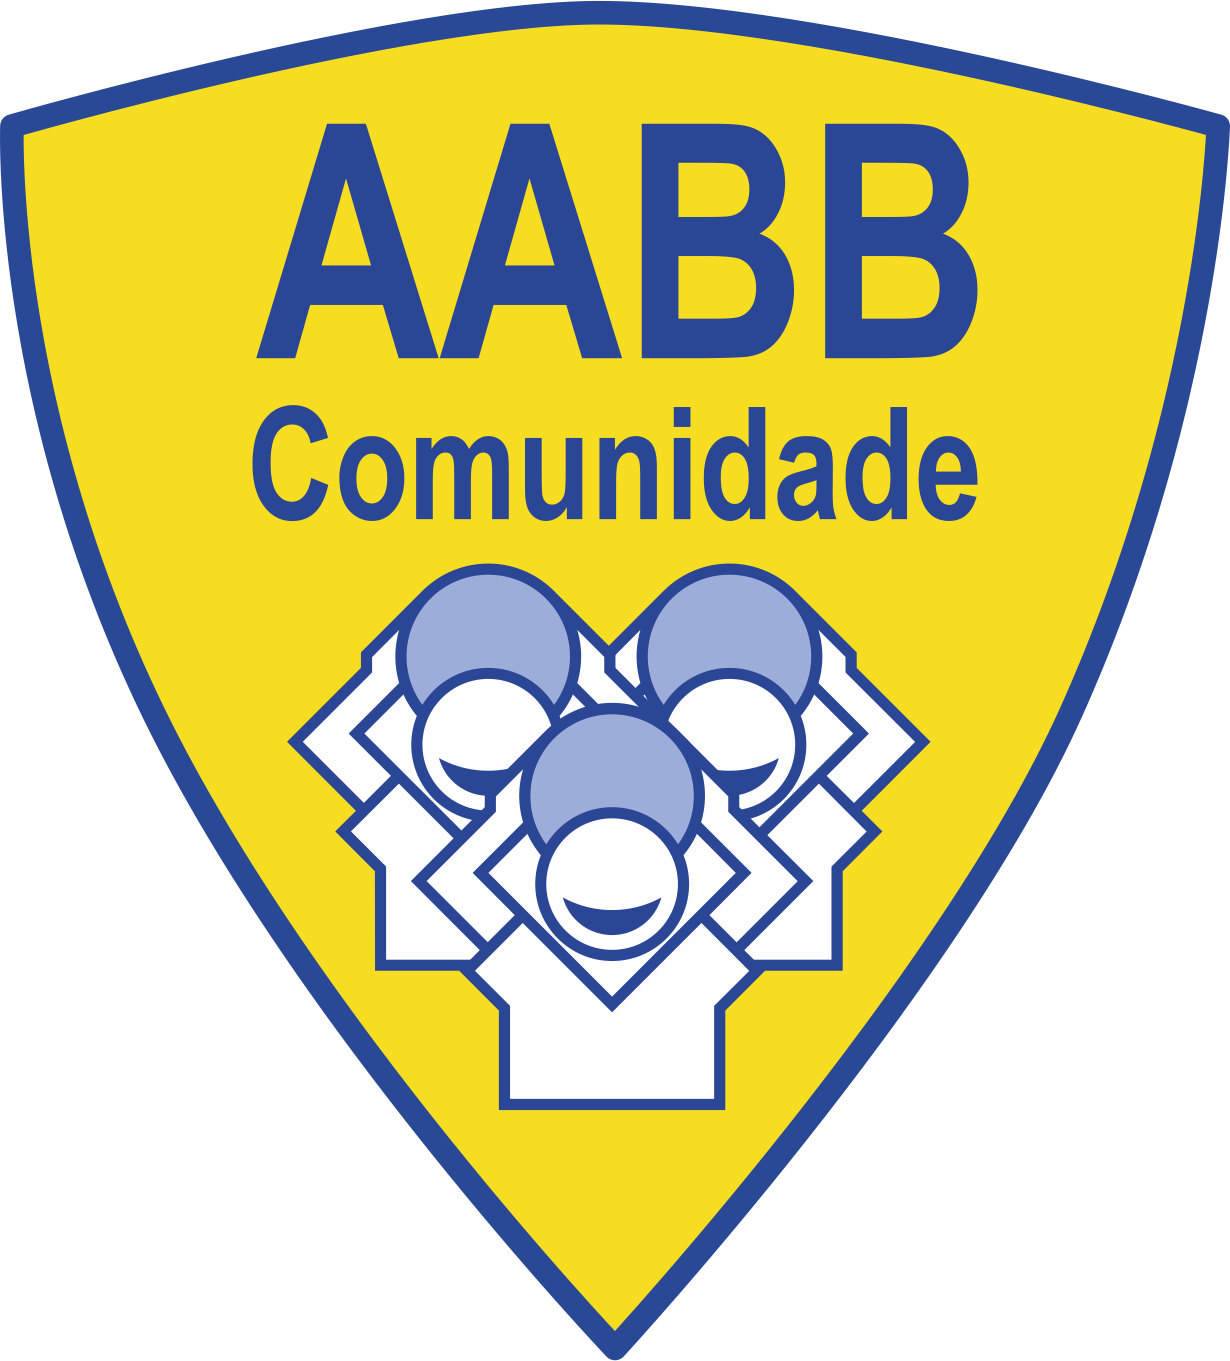 Wesley Brasil; Logo of Associ